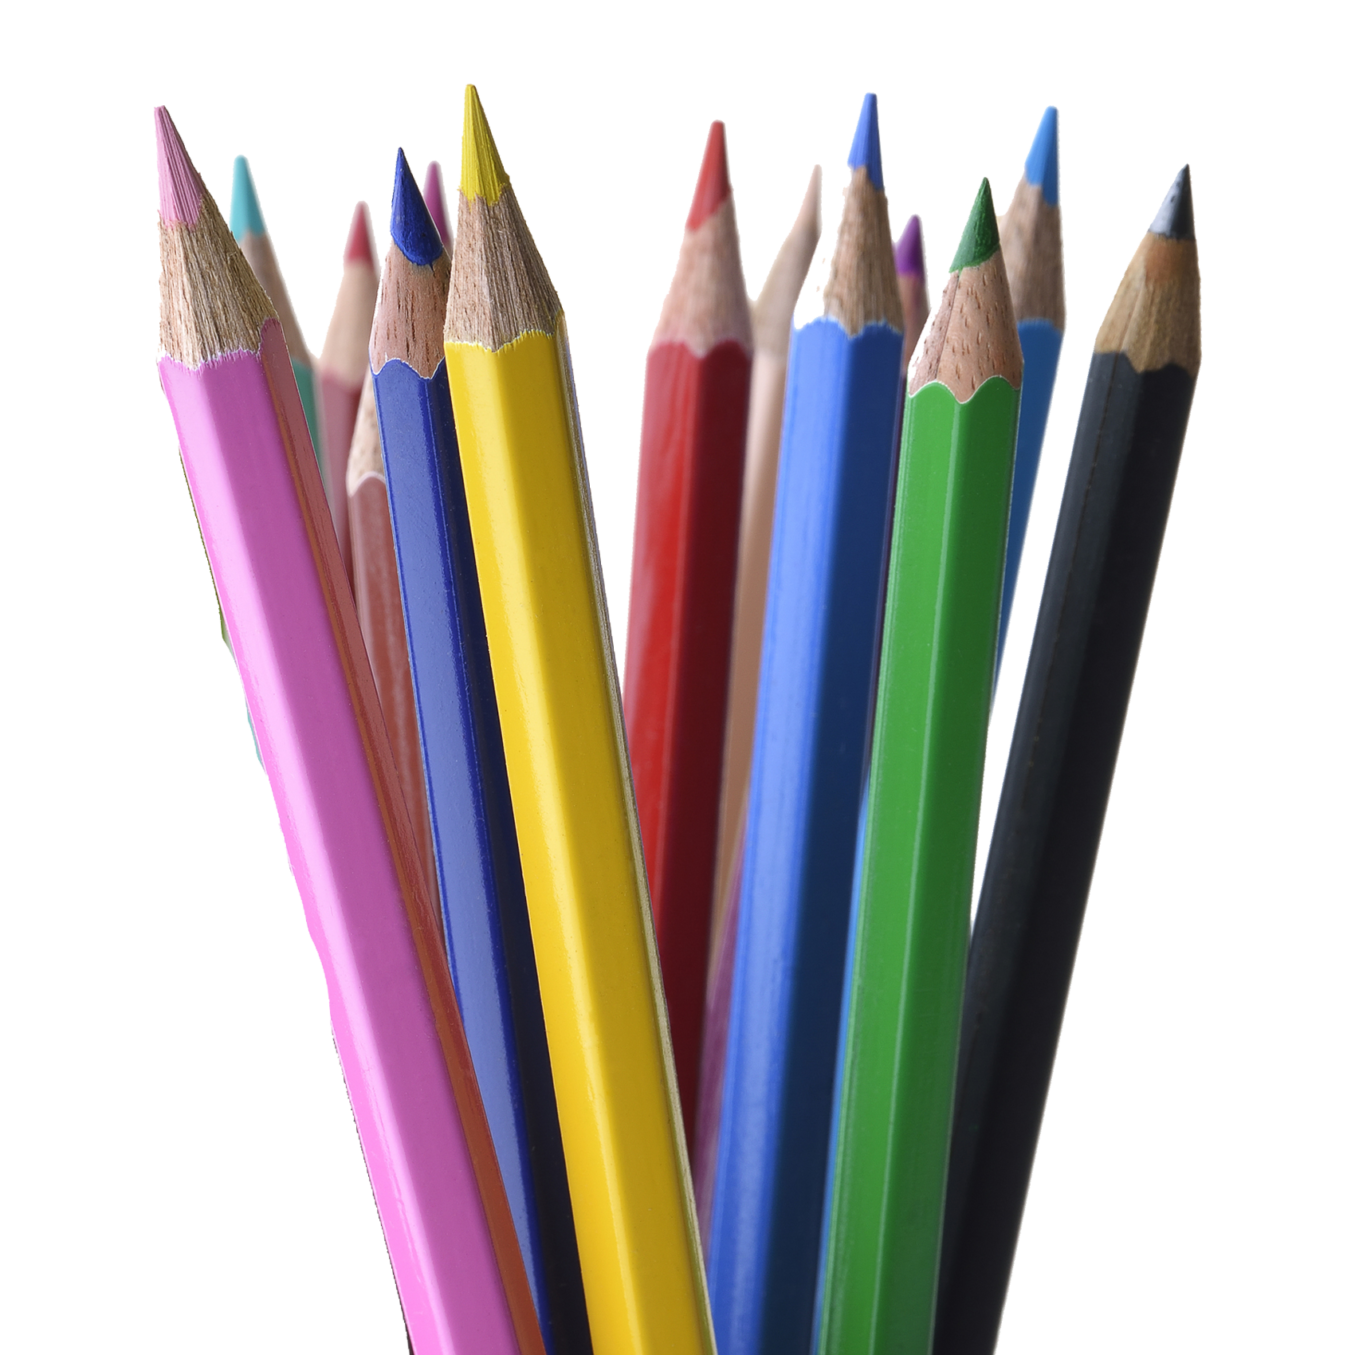 colored pencils, XMPIE, XM Pie, Xerox, Electronic Business Machines, Lexington, KY, Lexmark, Xerox, Dealer, Reseller, MFP, Printer, Copier, Kentucky